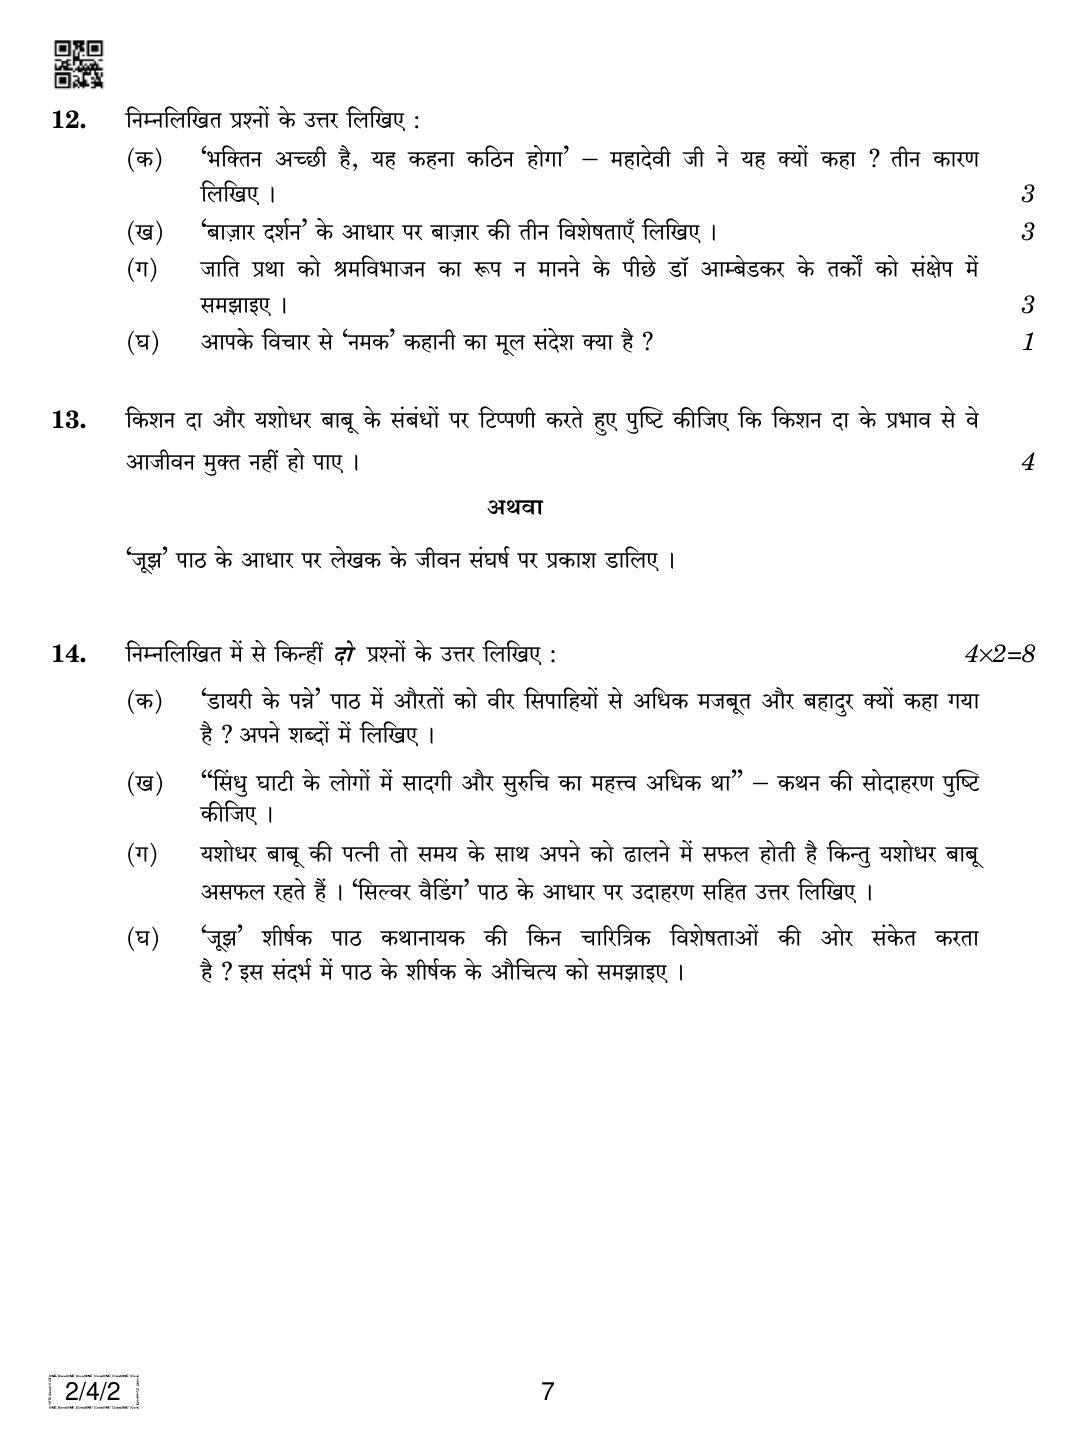 CBSE Class 12 2-4-2 Hindi Core 2019 Question Paper - Page 7